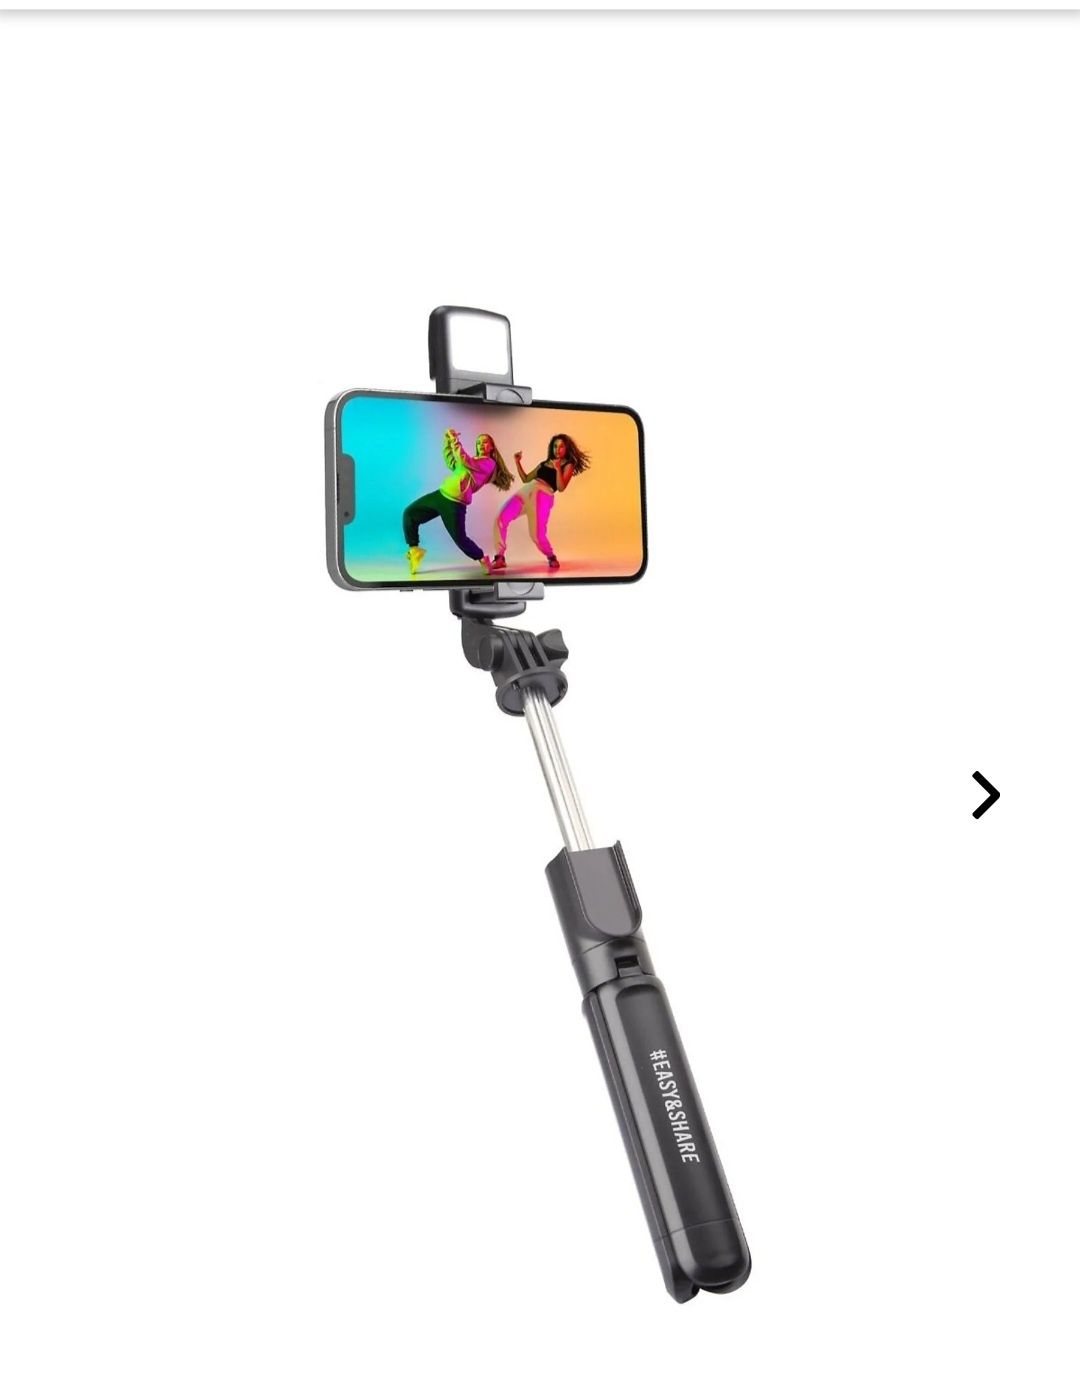 Nowy Selfie stick!